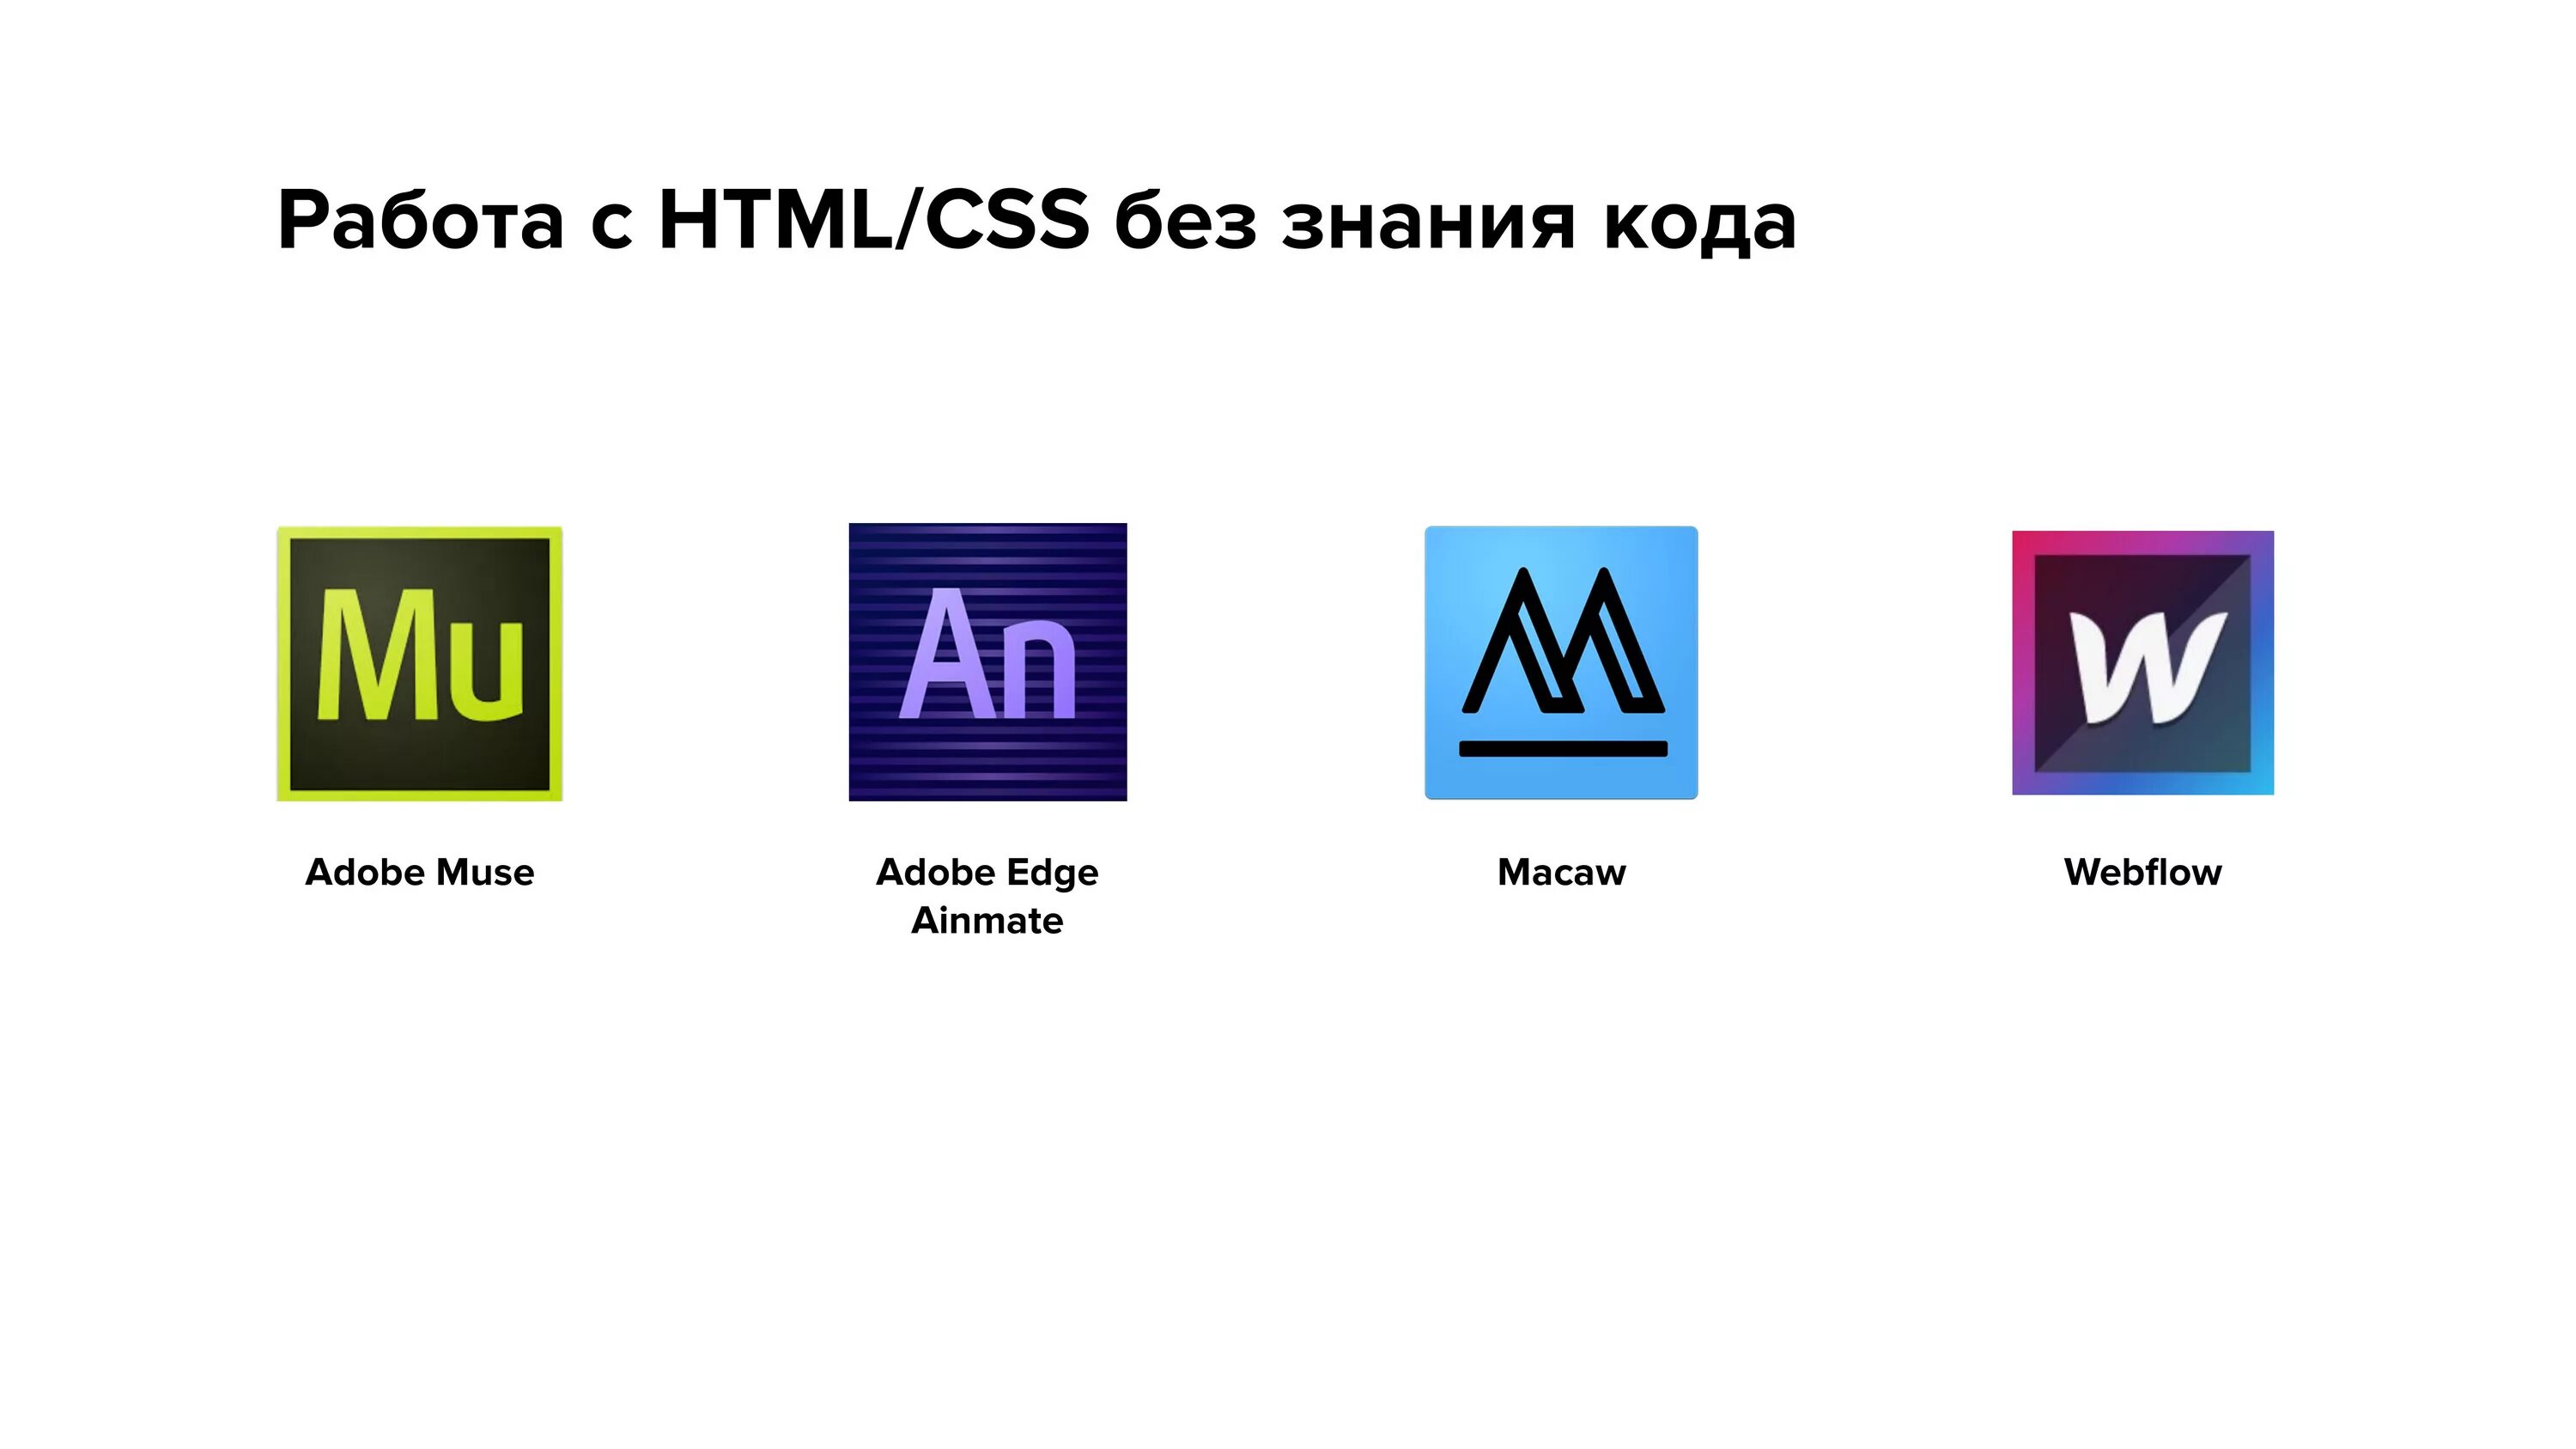 Программа web. Программы для веб дизайна. Программы для веб дизайнера. Web дизайнер программы. Веб дизайн софта.